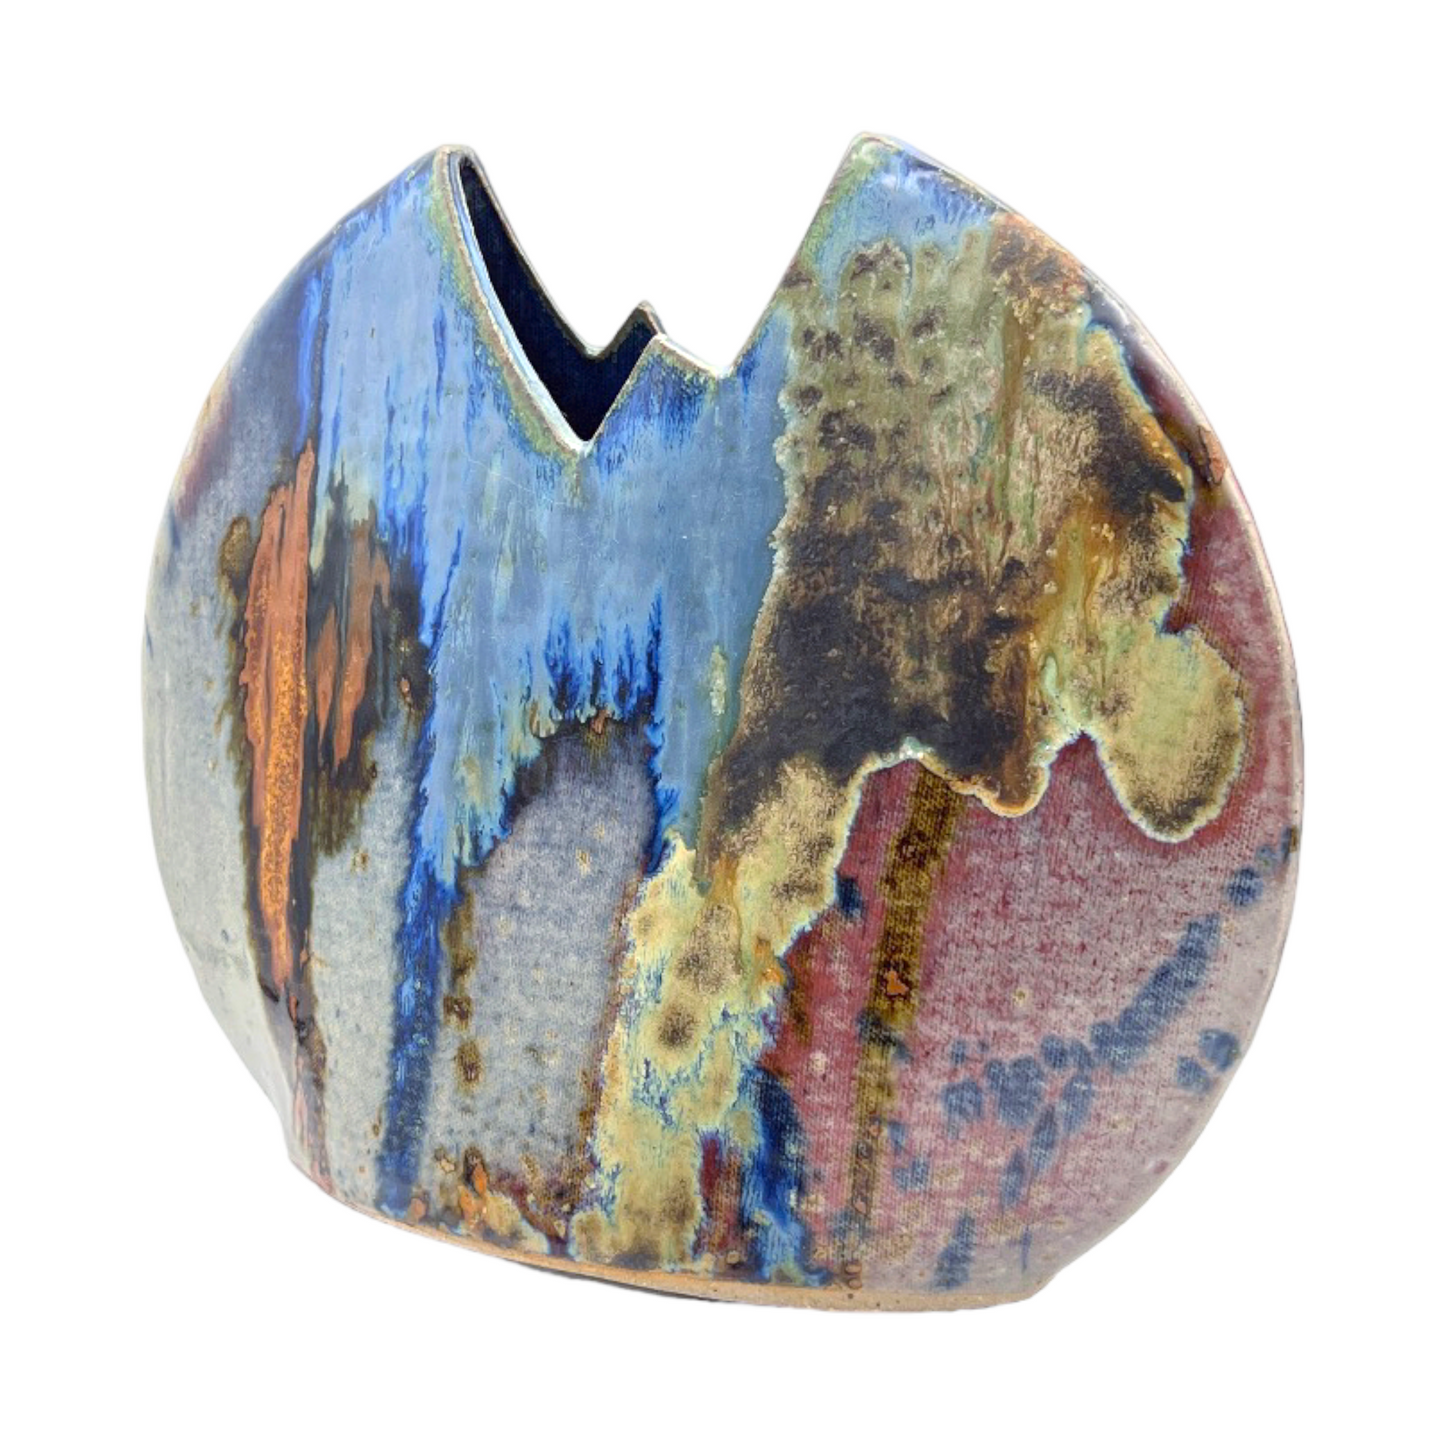 Jim Lauer Studio Pottery - Circle Jagged Top Vase - 8.5"